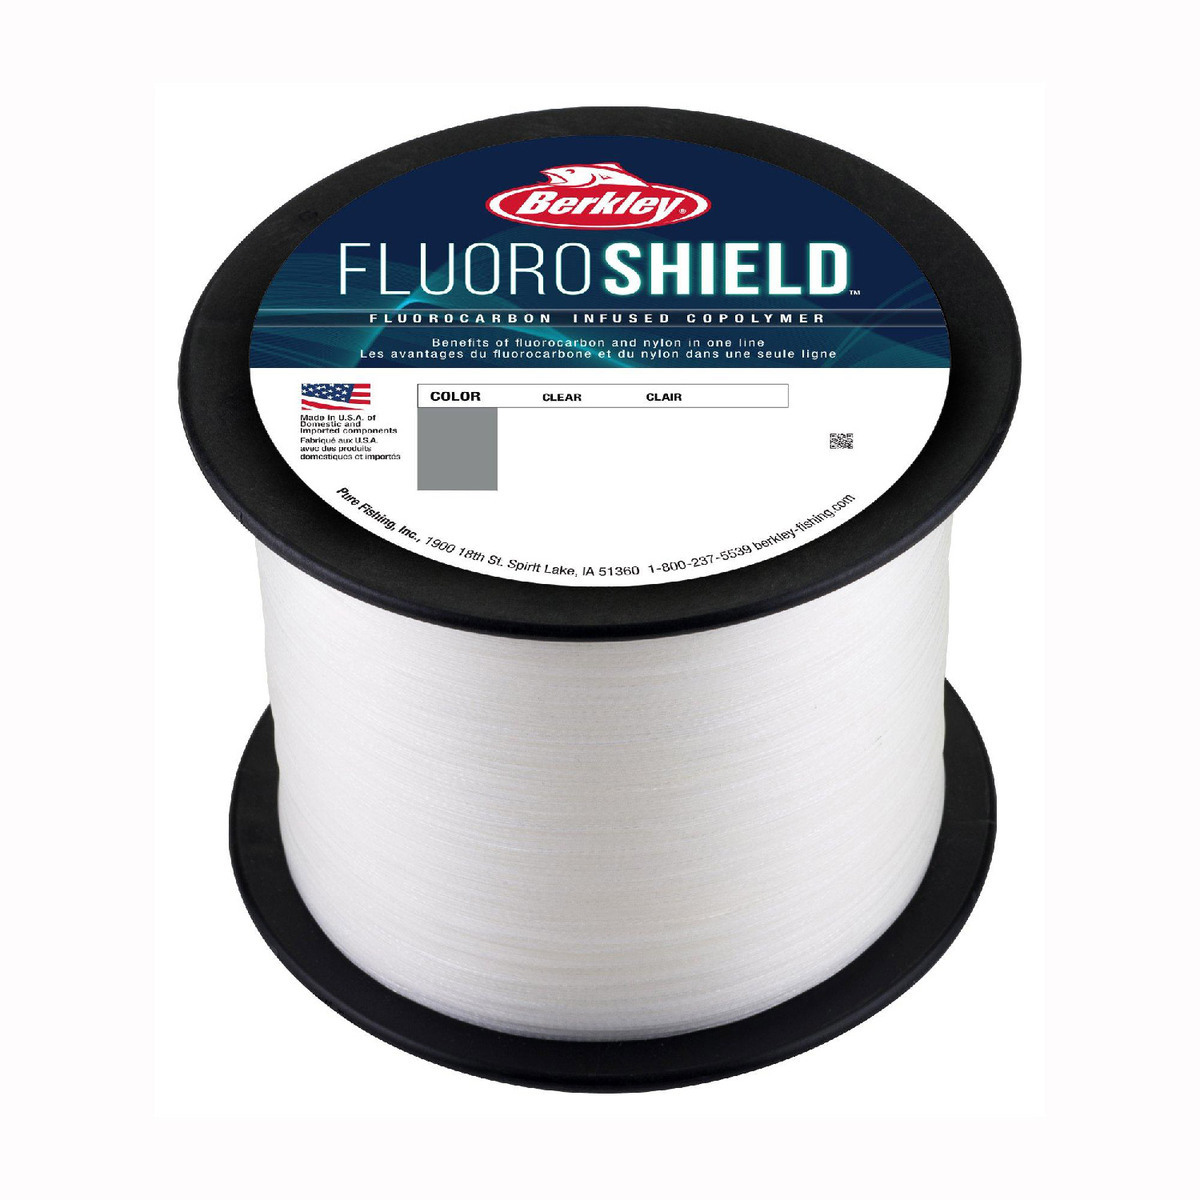 Berkley FluoroShield Fluorocarbon Infused Copolymer Fishing Line